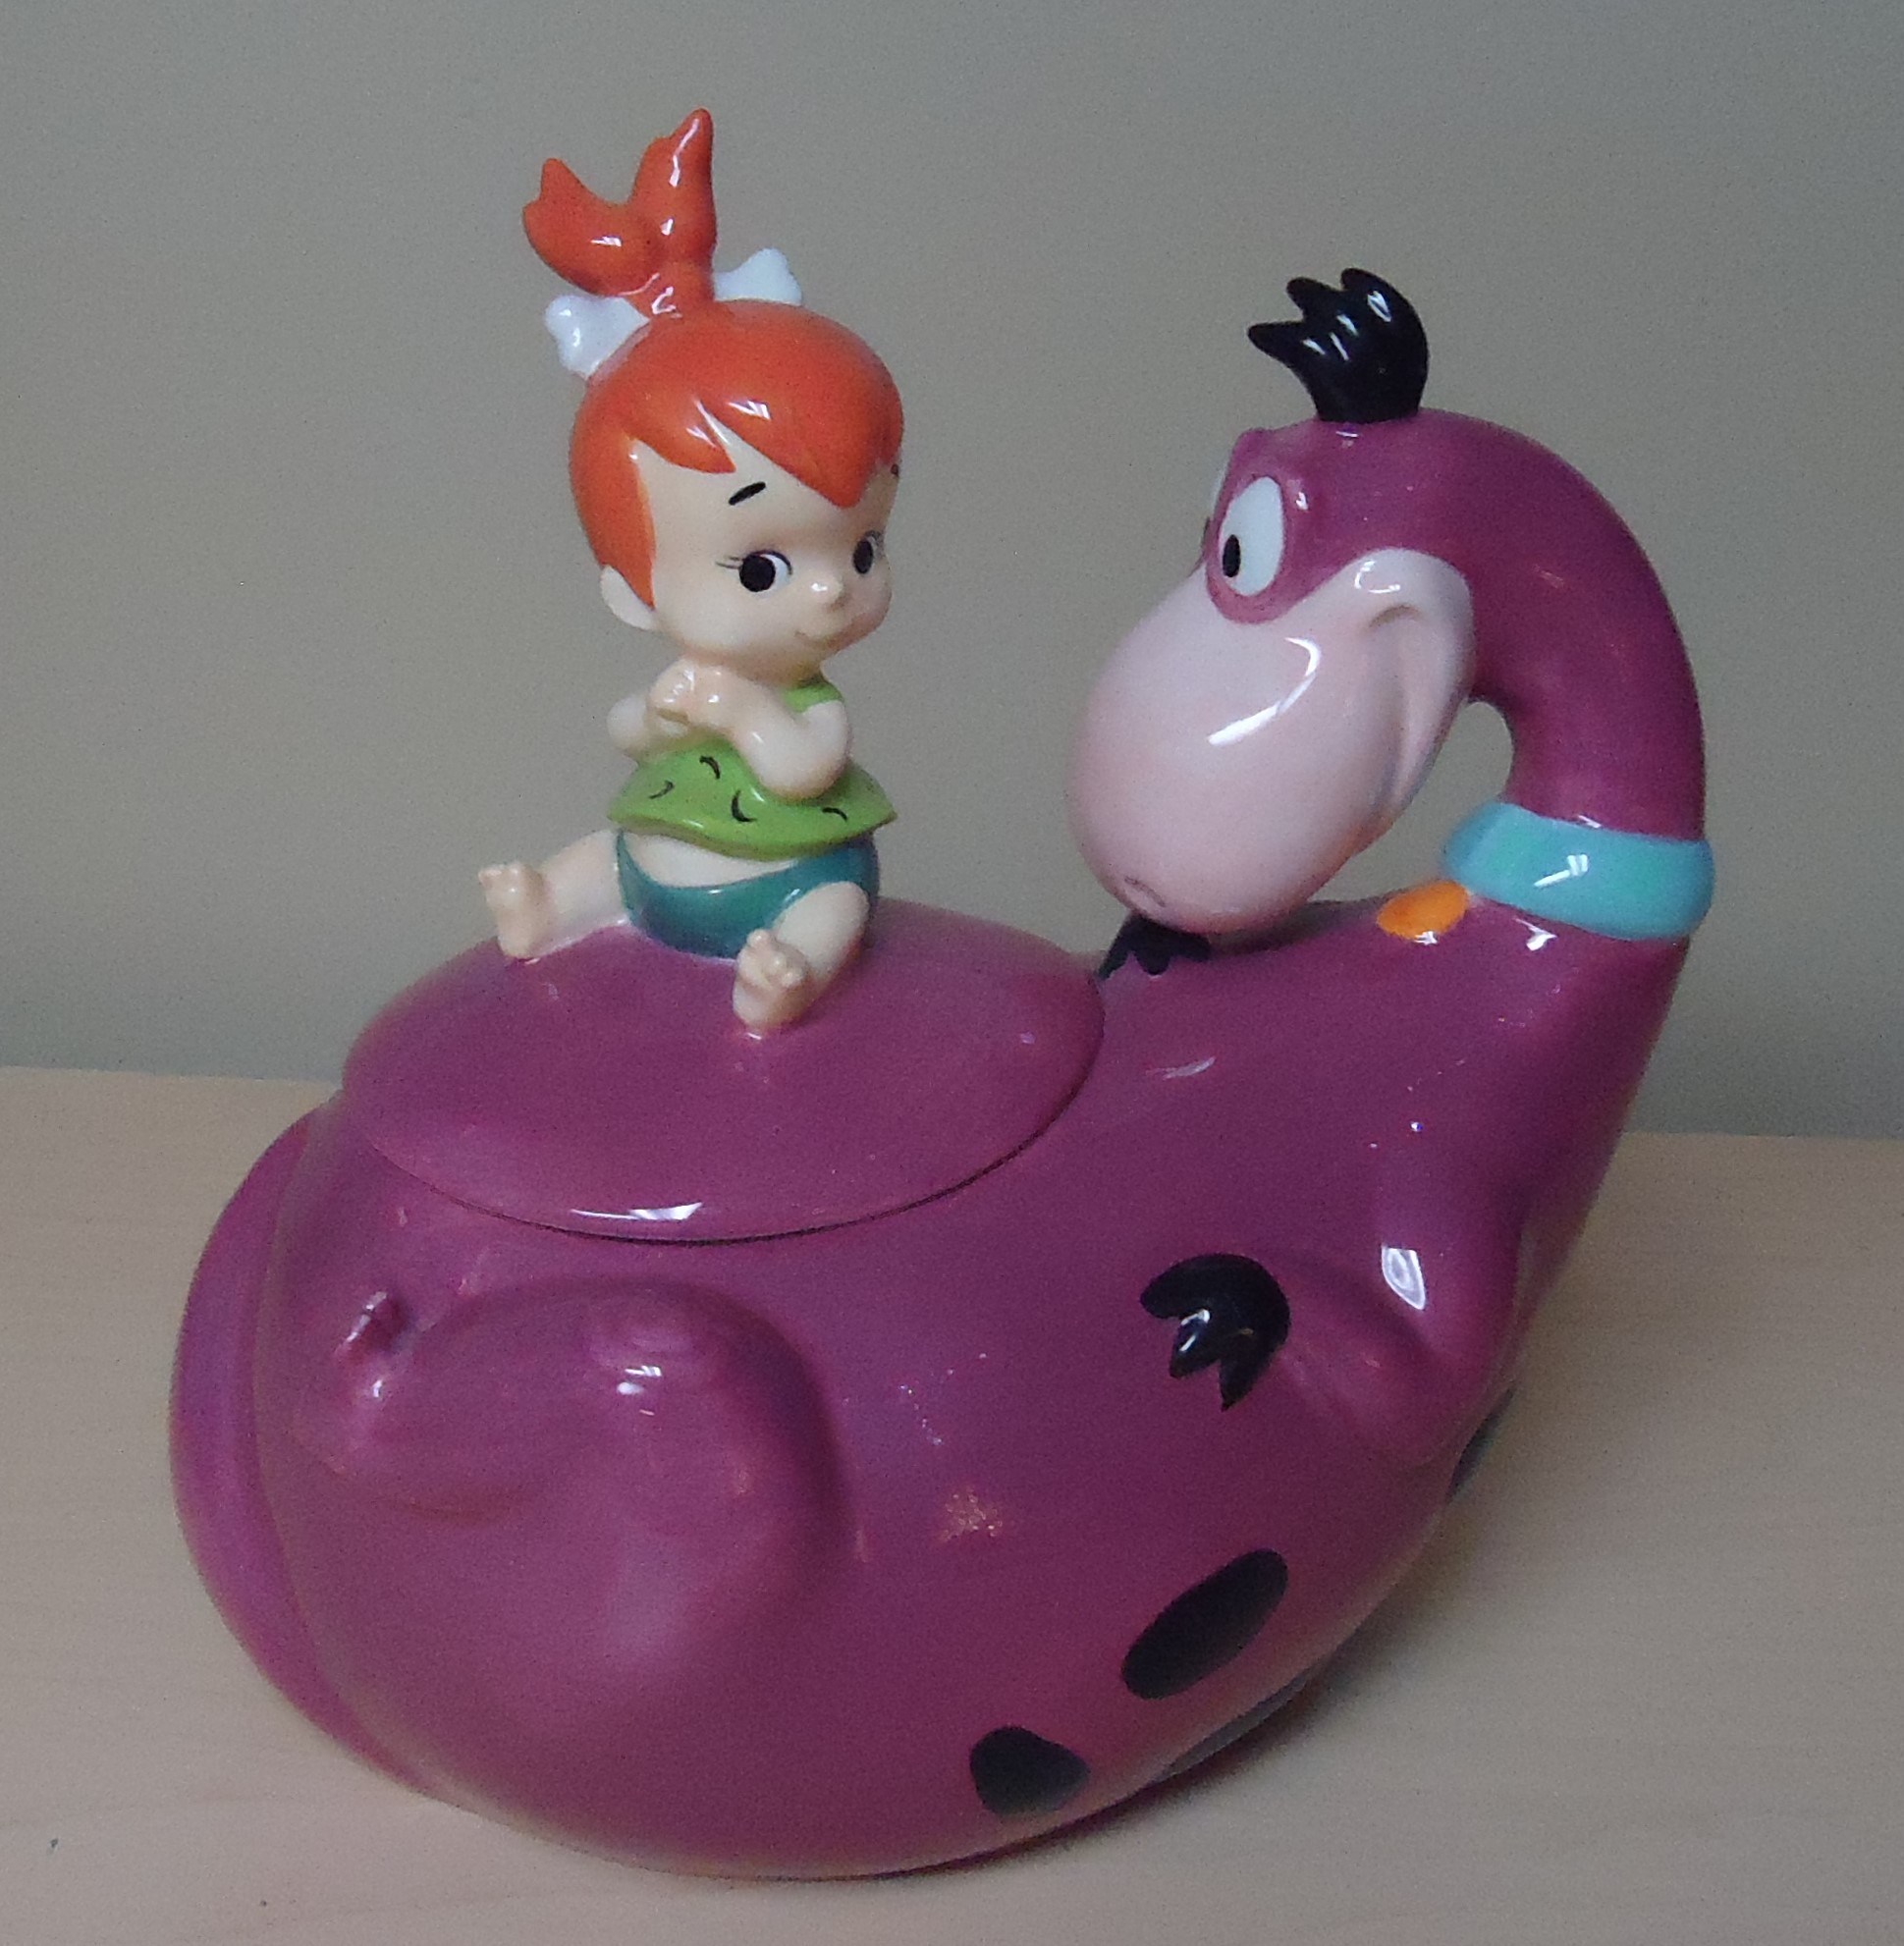 (6) "Flintstones" Dino & Pebbles
Cookie Jar
$55.00